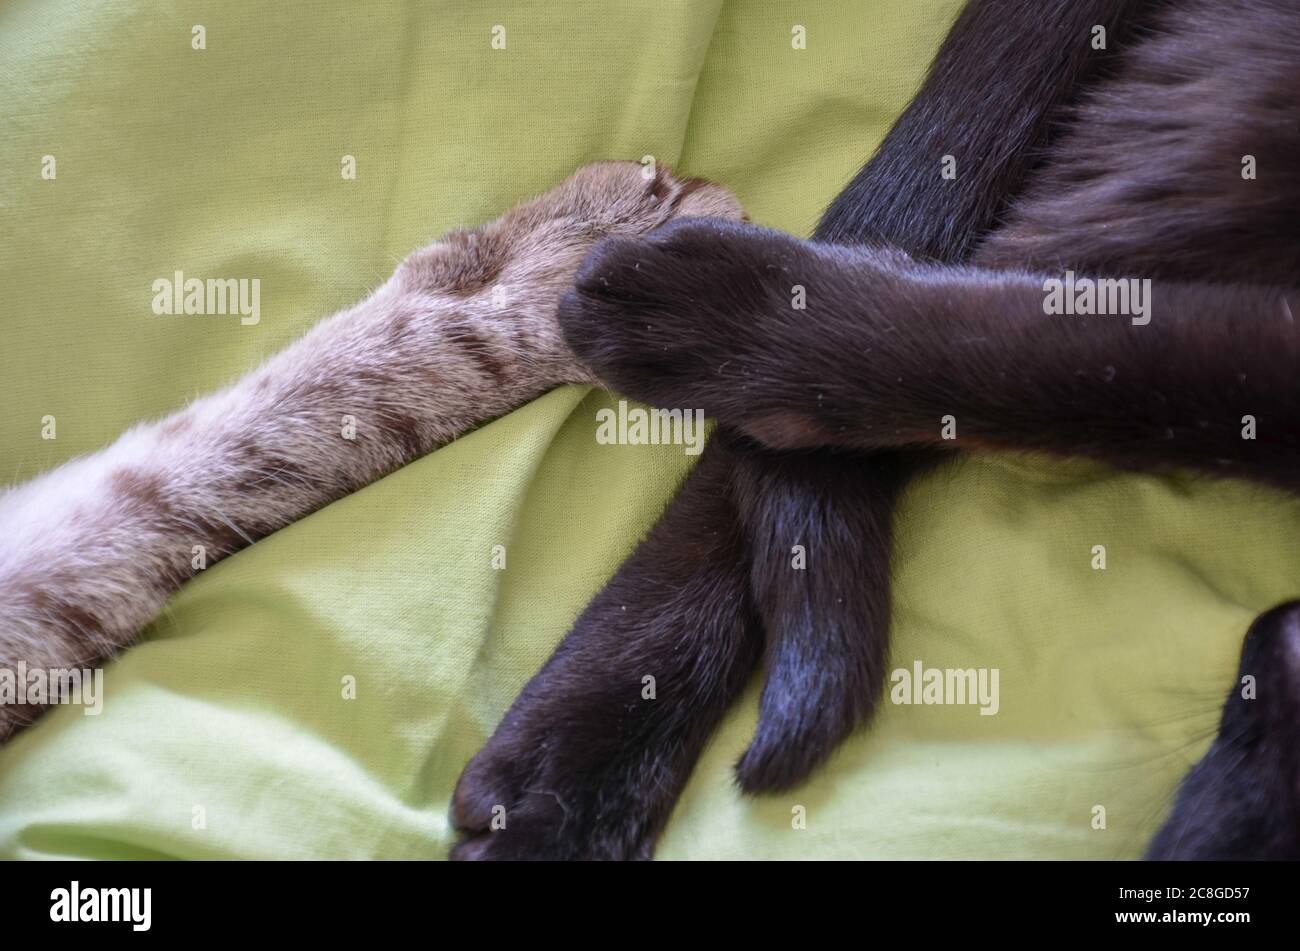 cerca de dos patas de gato tocándose entre sí (gato negro y tabby) con fondo de stock - Alamy